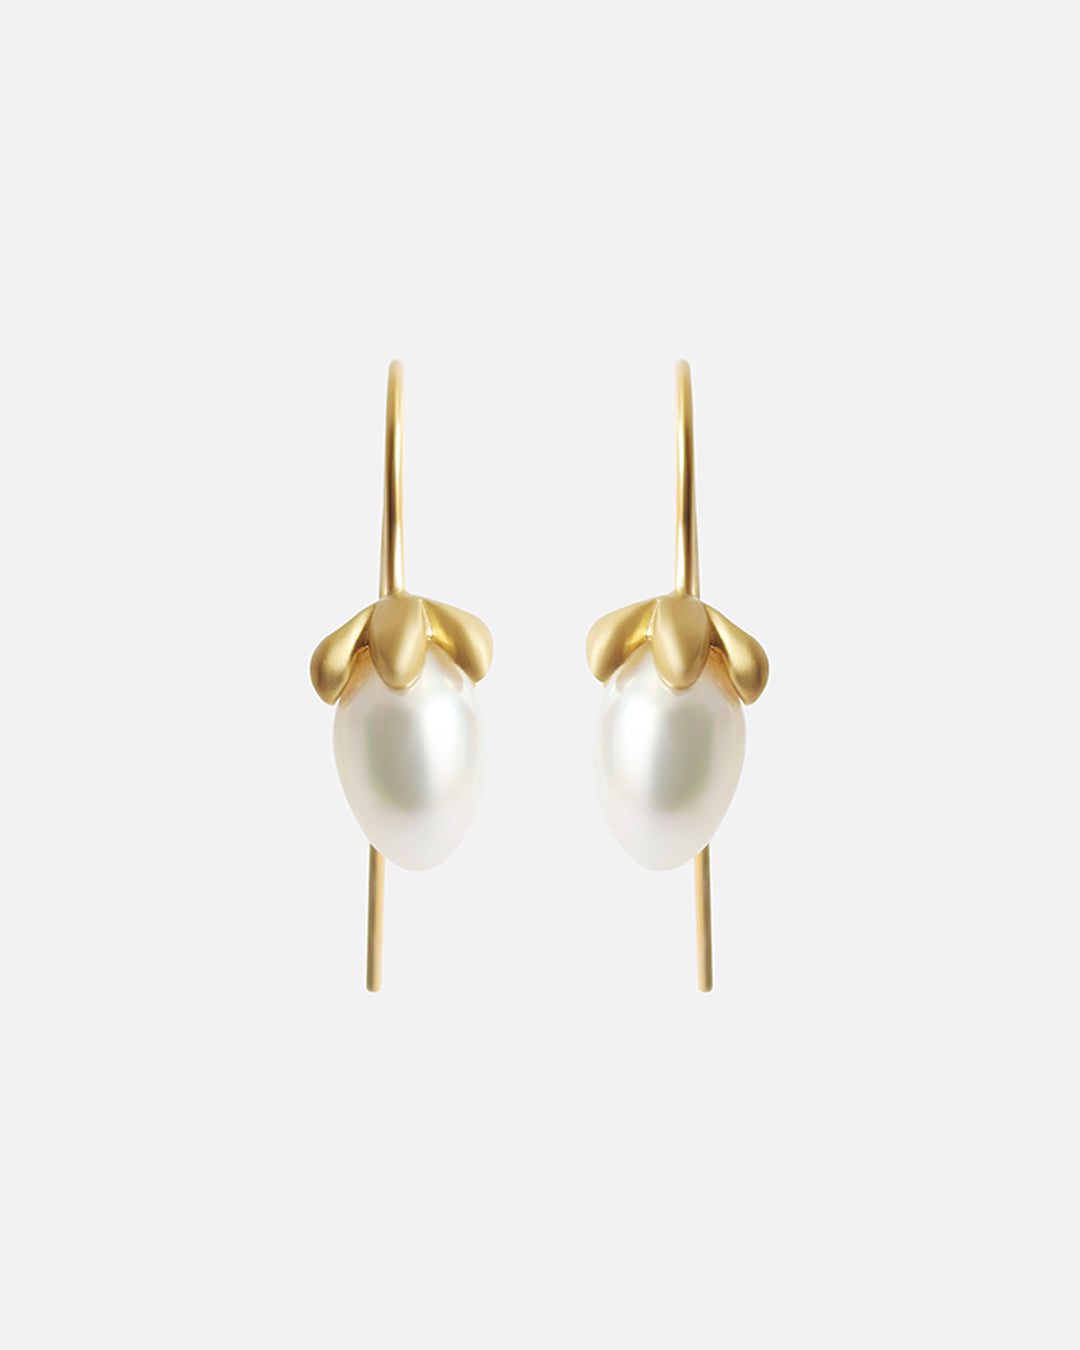 Flower & Japanese Pearl / Earrings By Tricia Kirkland